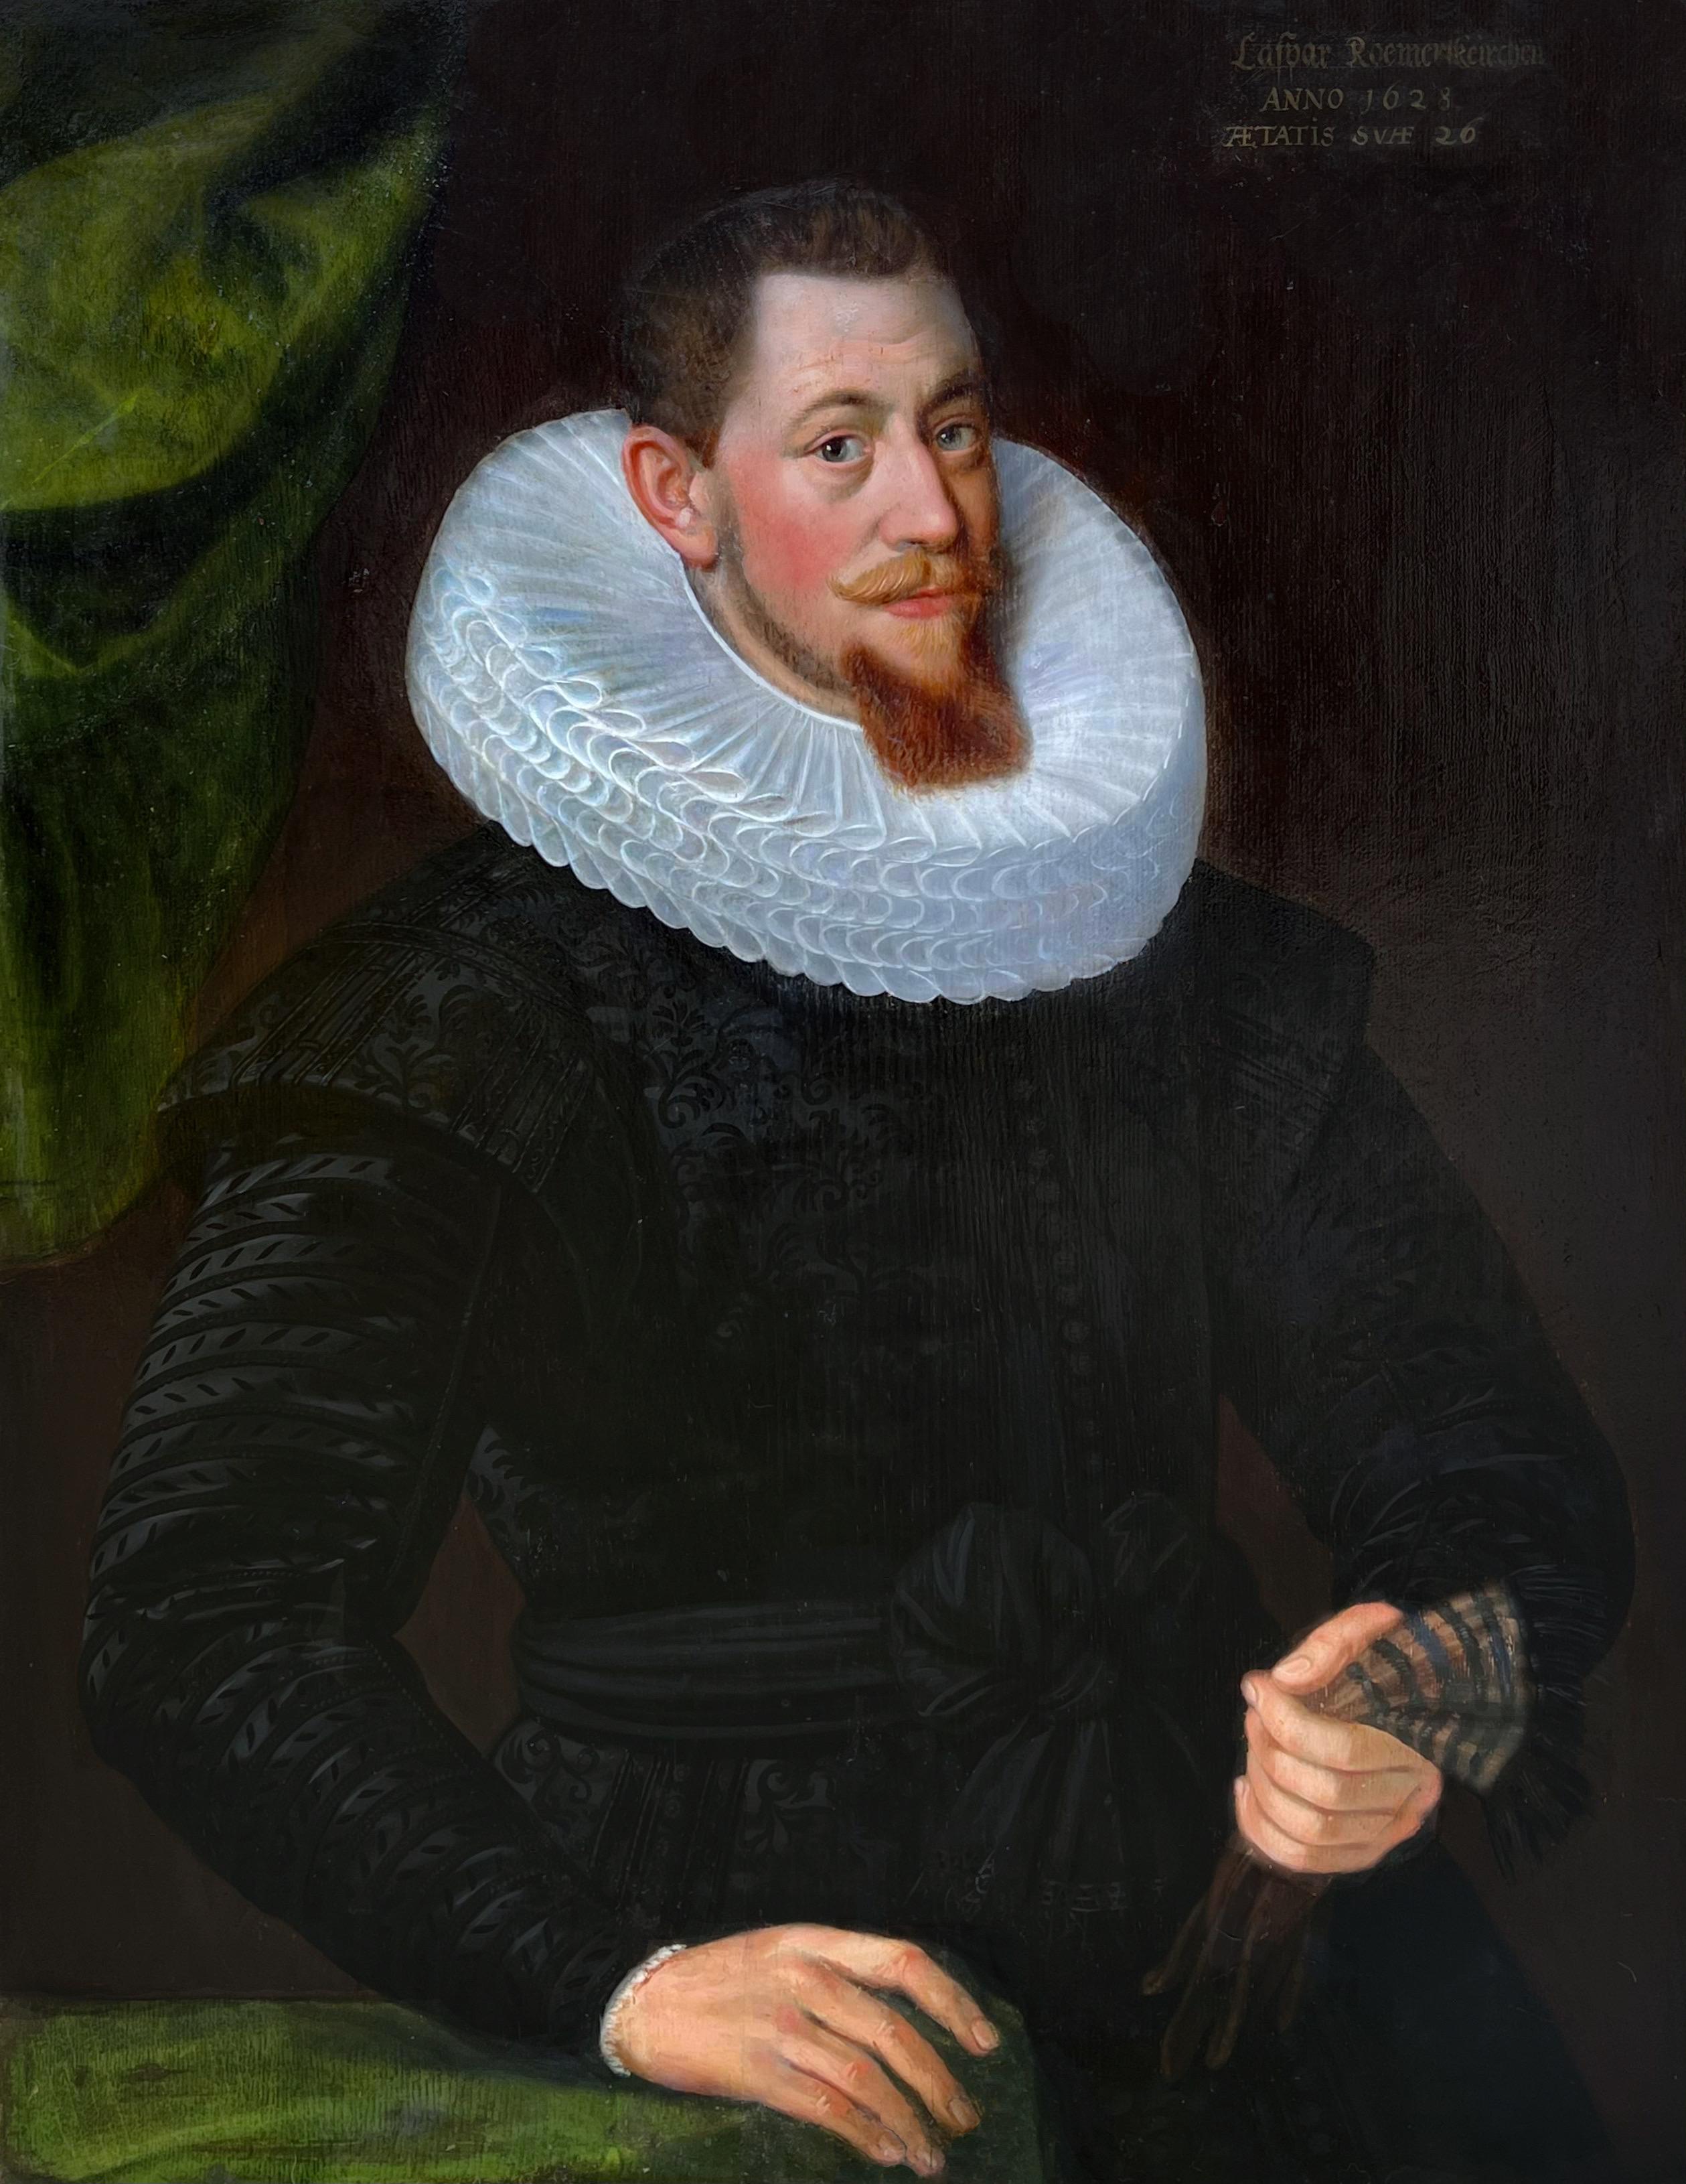 17th century German portrait of a man - Wine merchant Caspar Roemerskirchen 1628